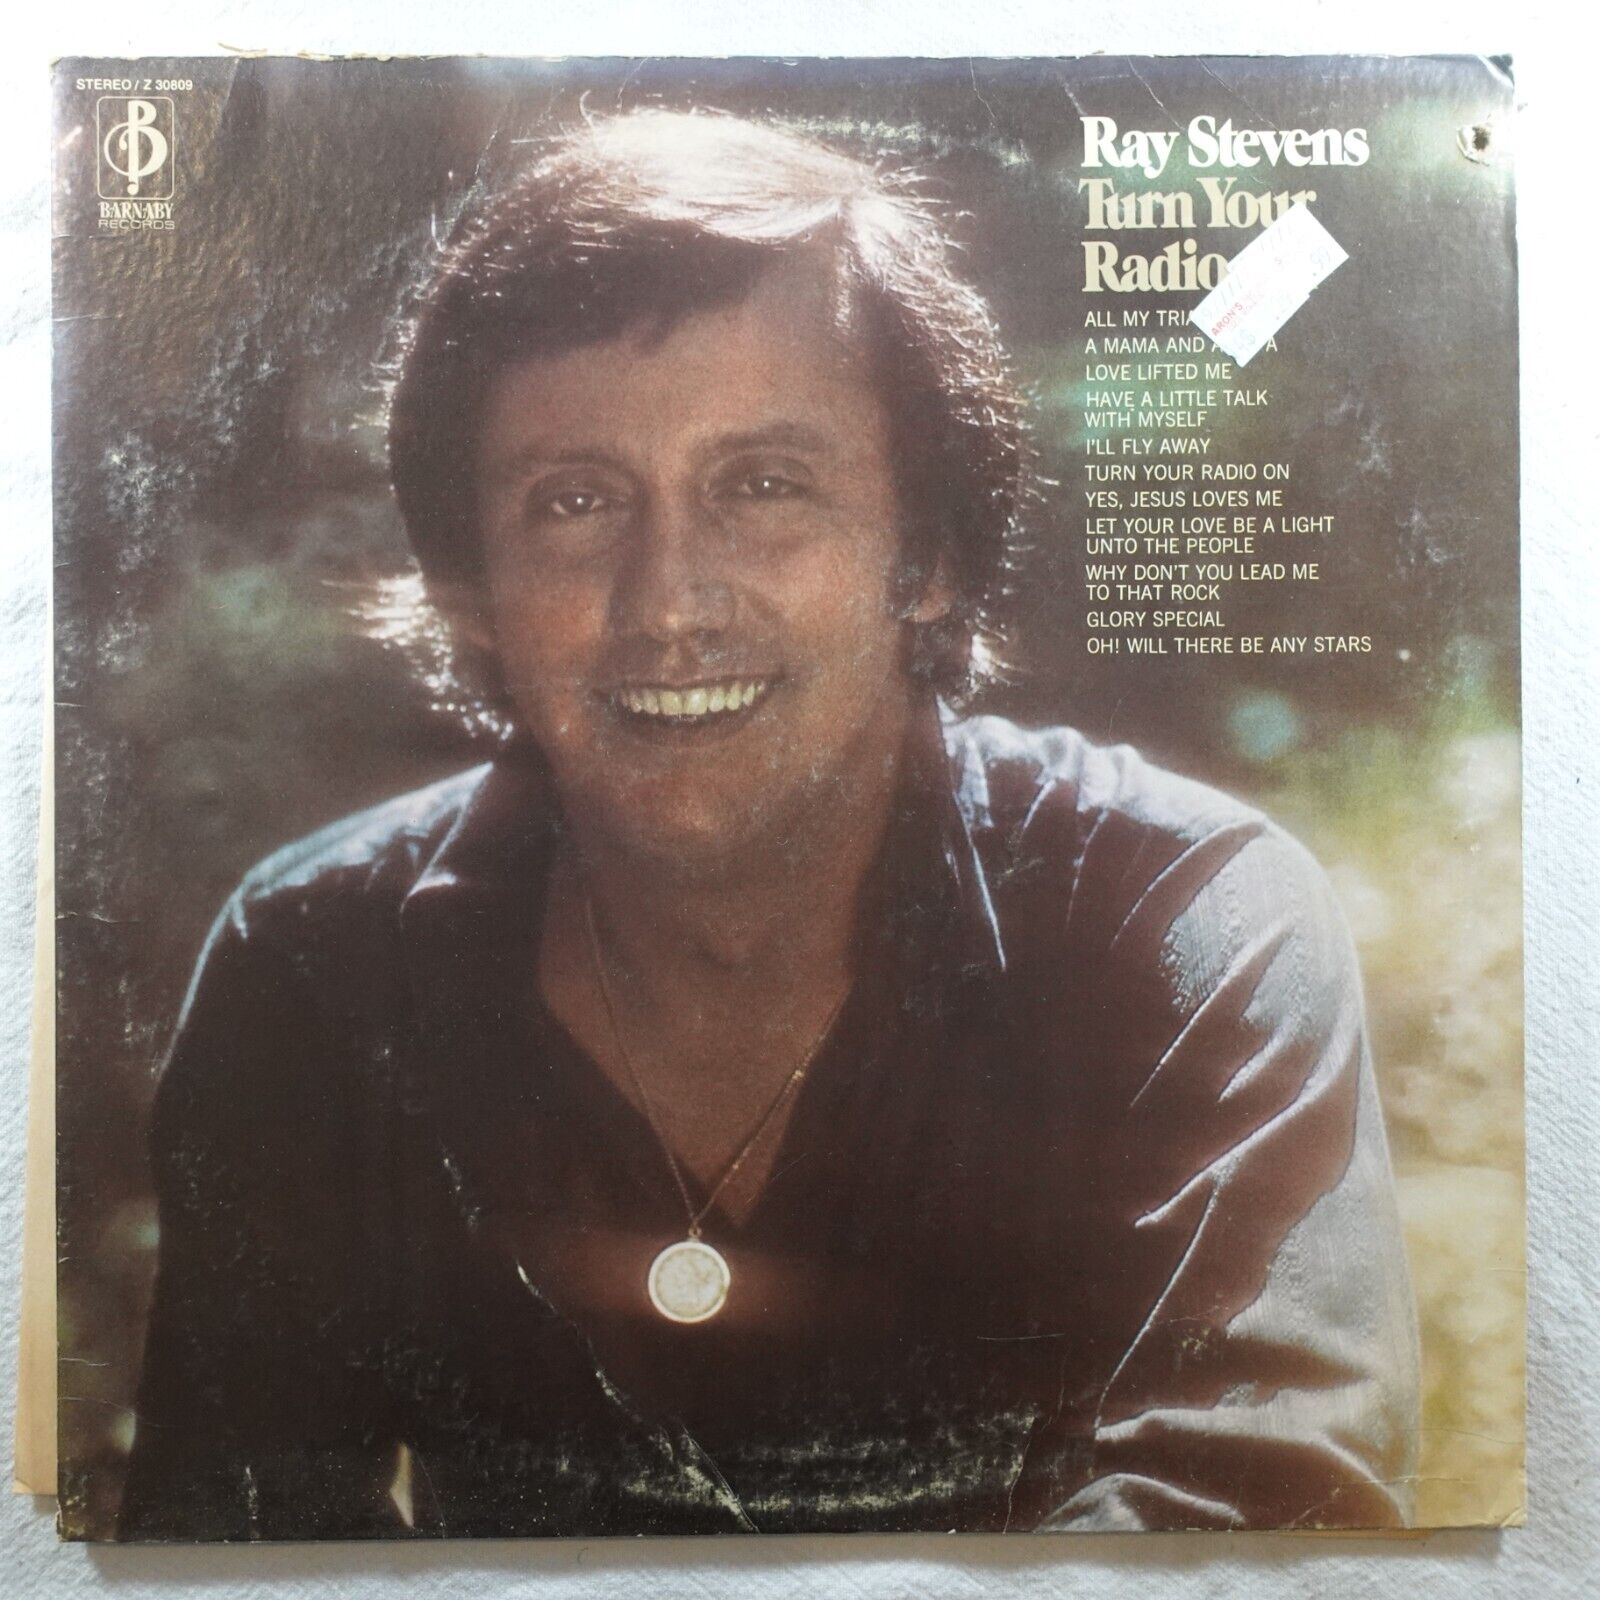 Ray Stevens Turn your Radio On   Record Album Vinyl LP